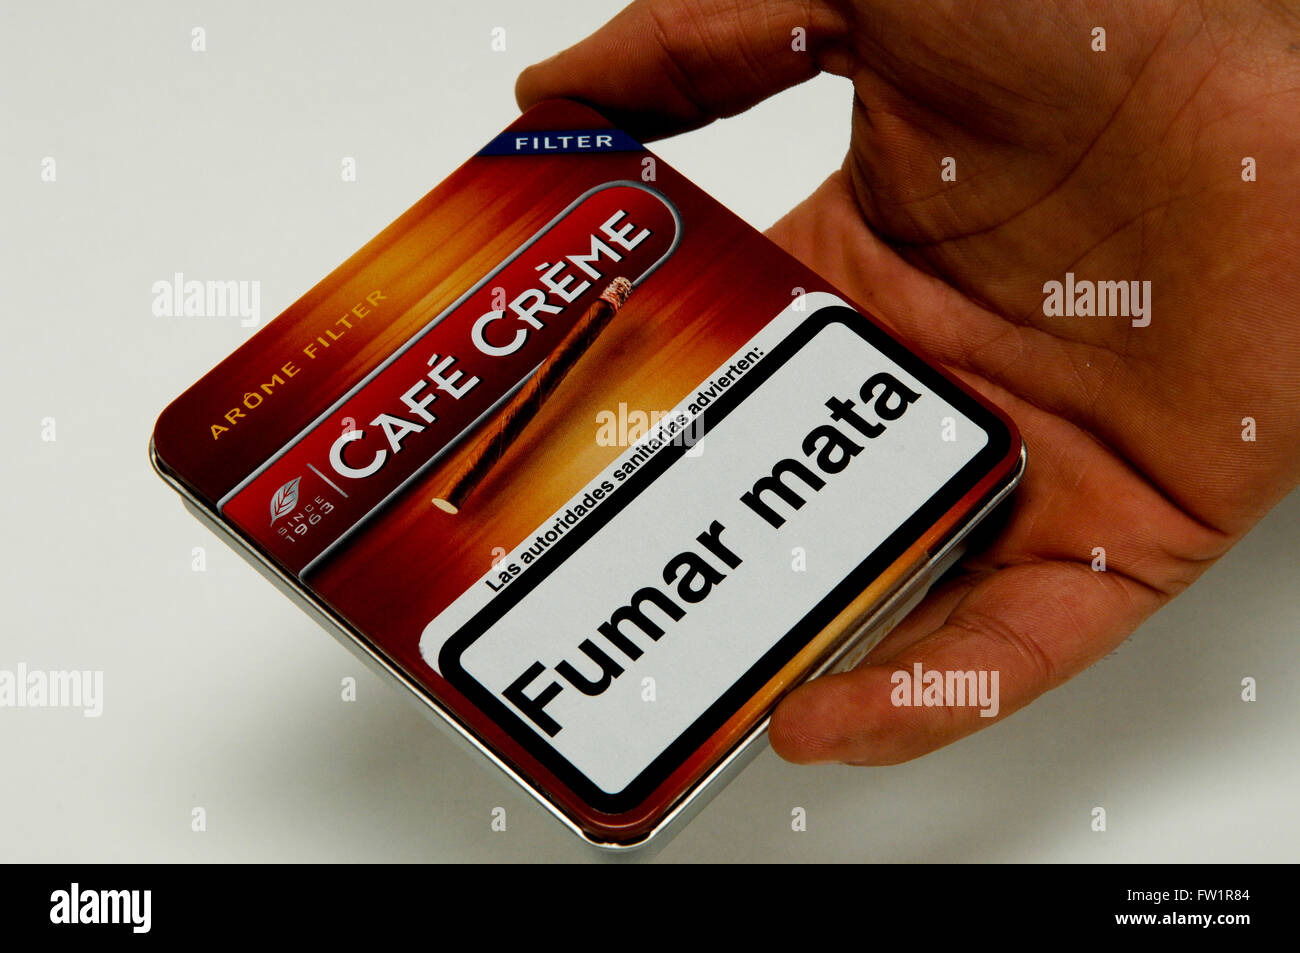 Cafe Cream arome filter Cigars Stock Photo - Alamy